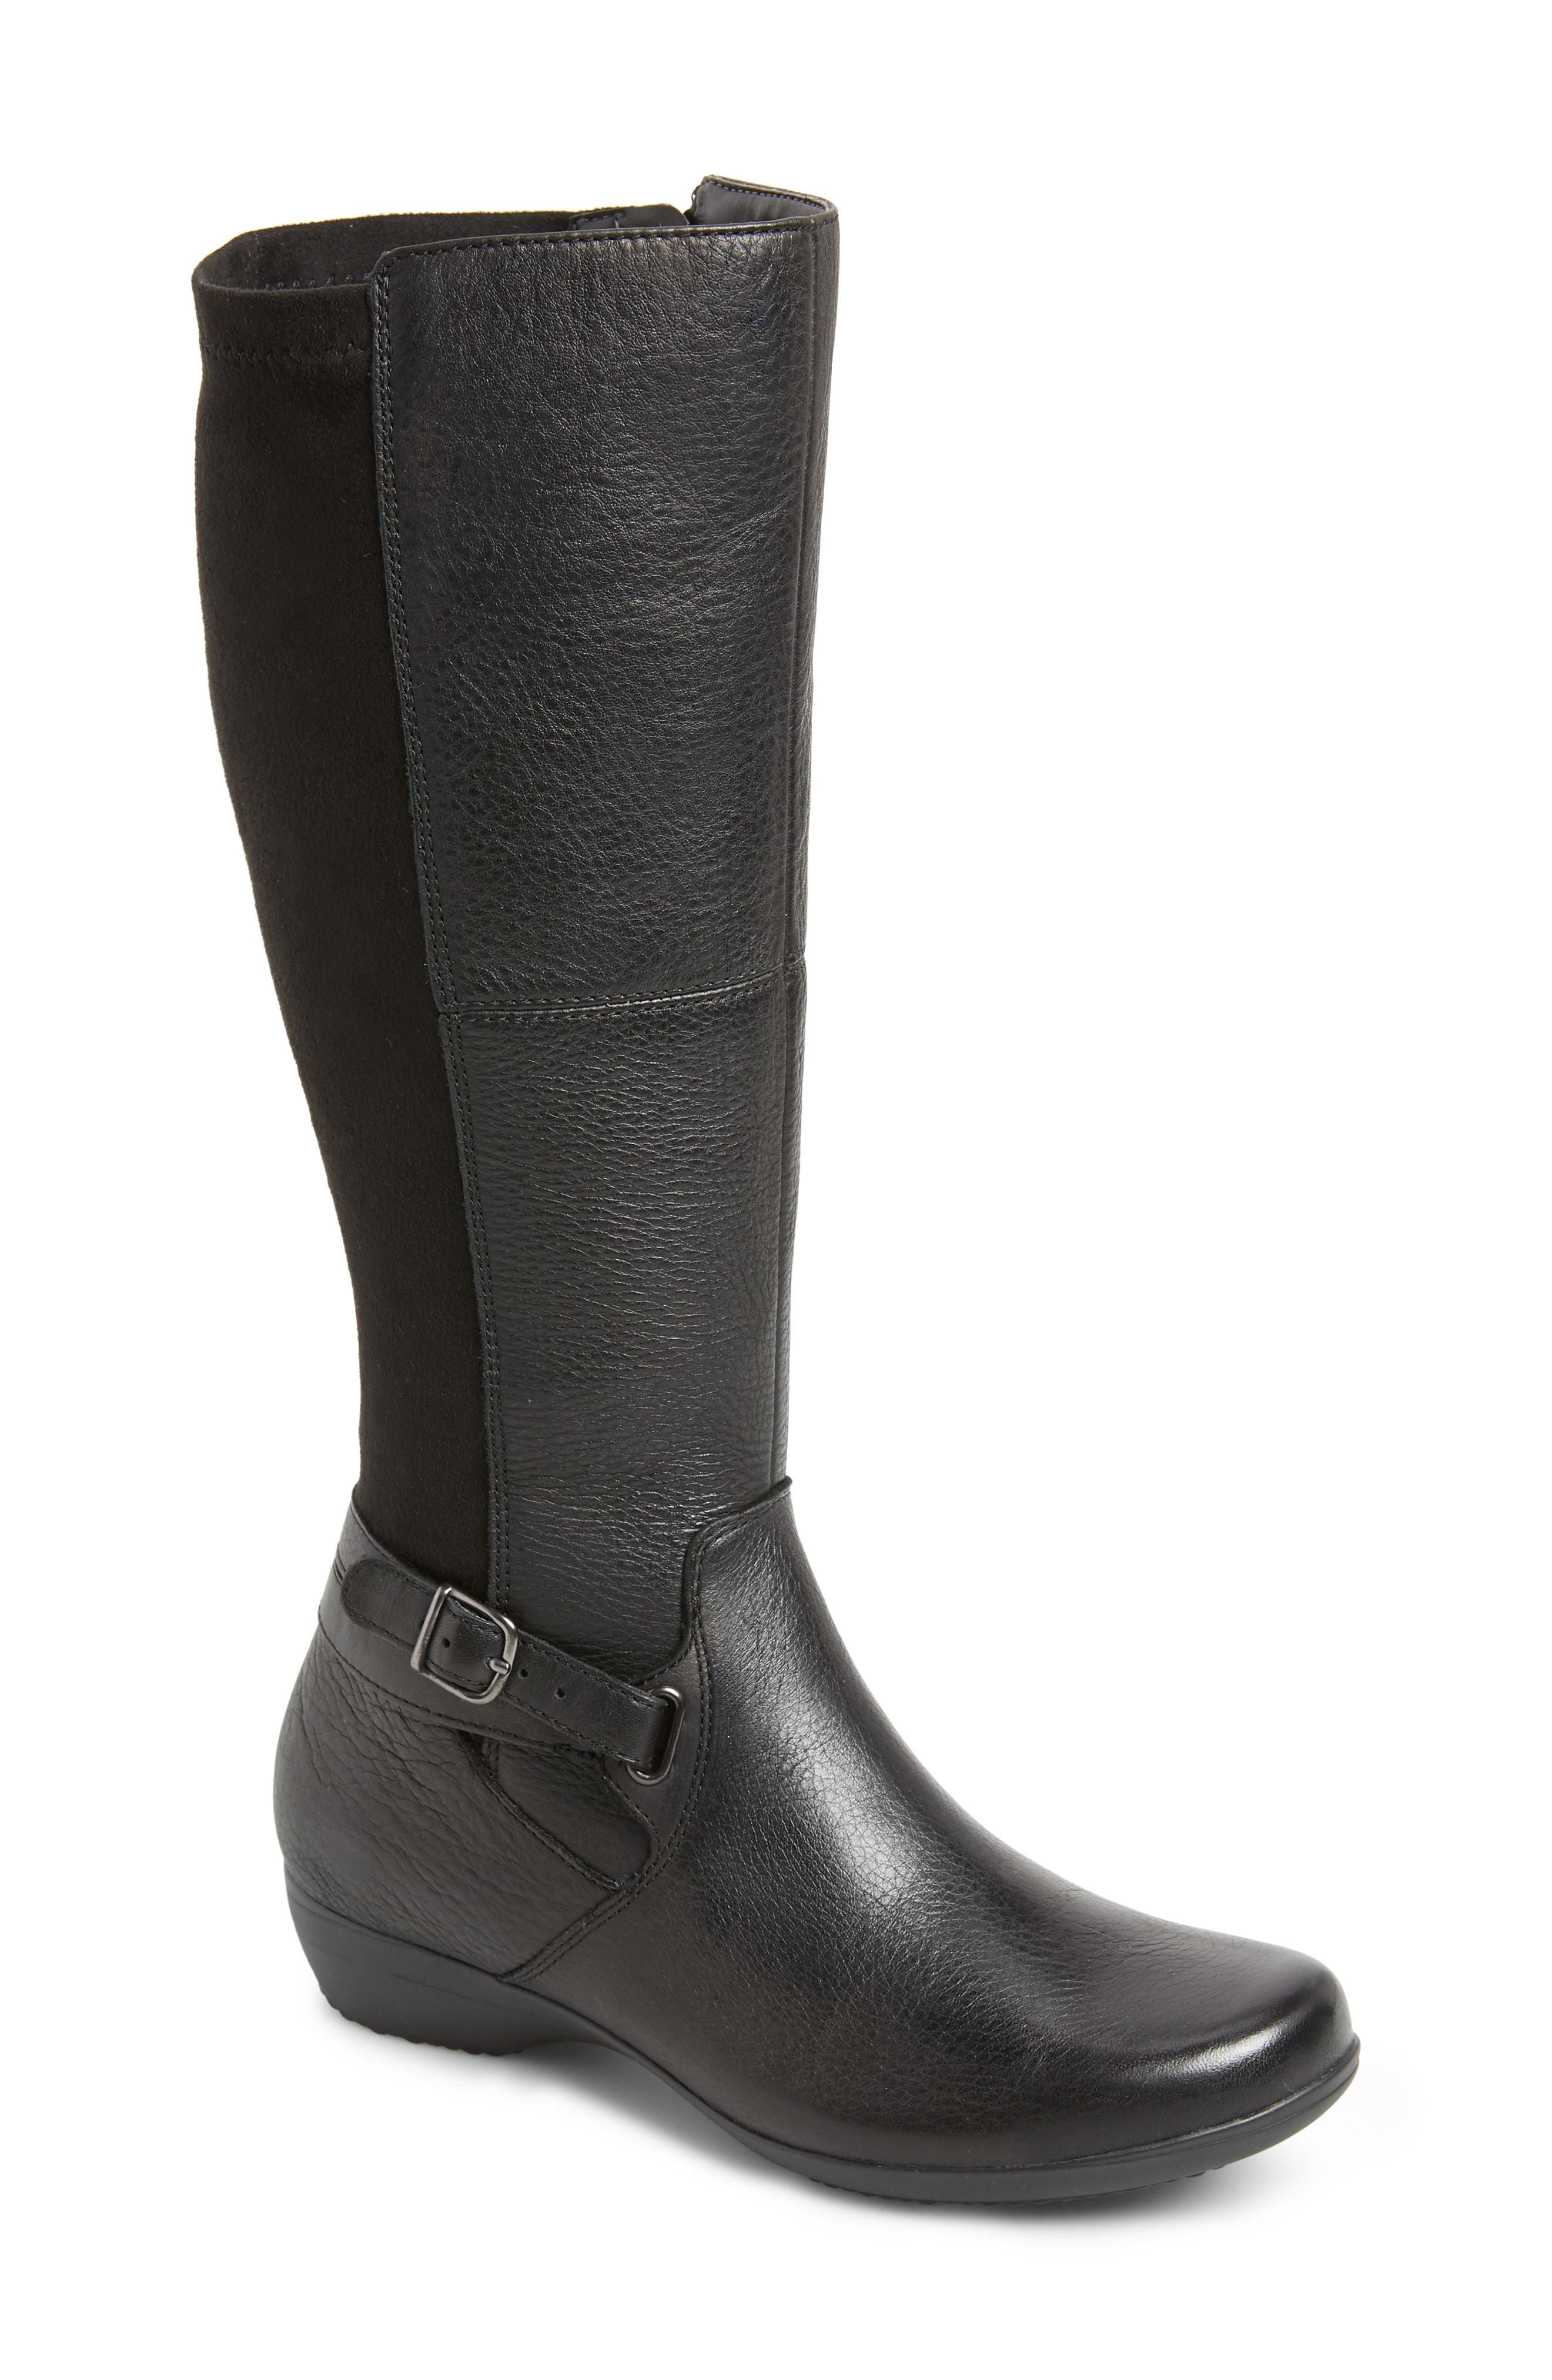 Dansko Francesca Knee High Riding Boot, $199 | Nordstrom | Lookastic.com